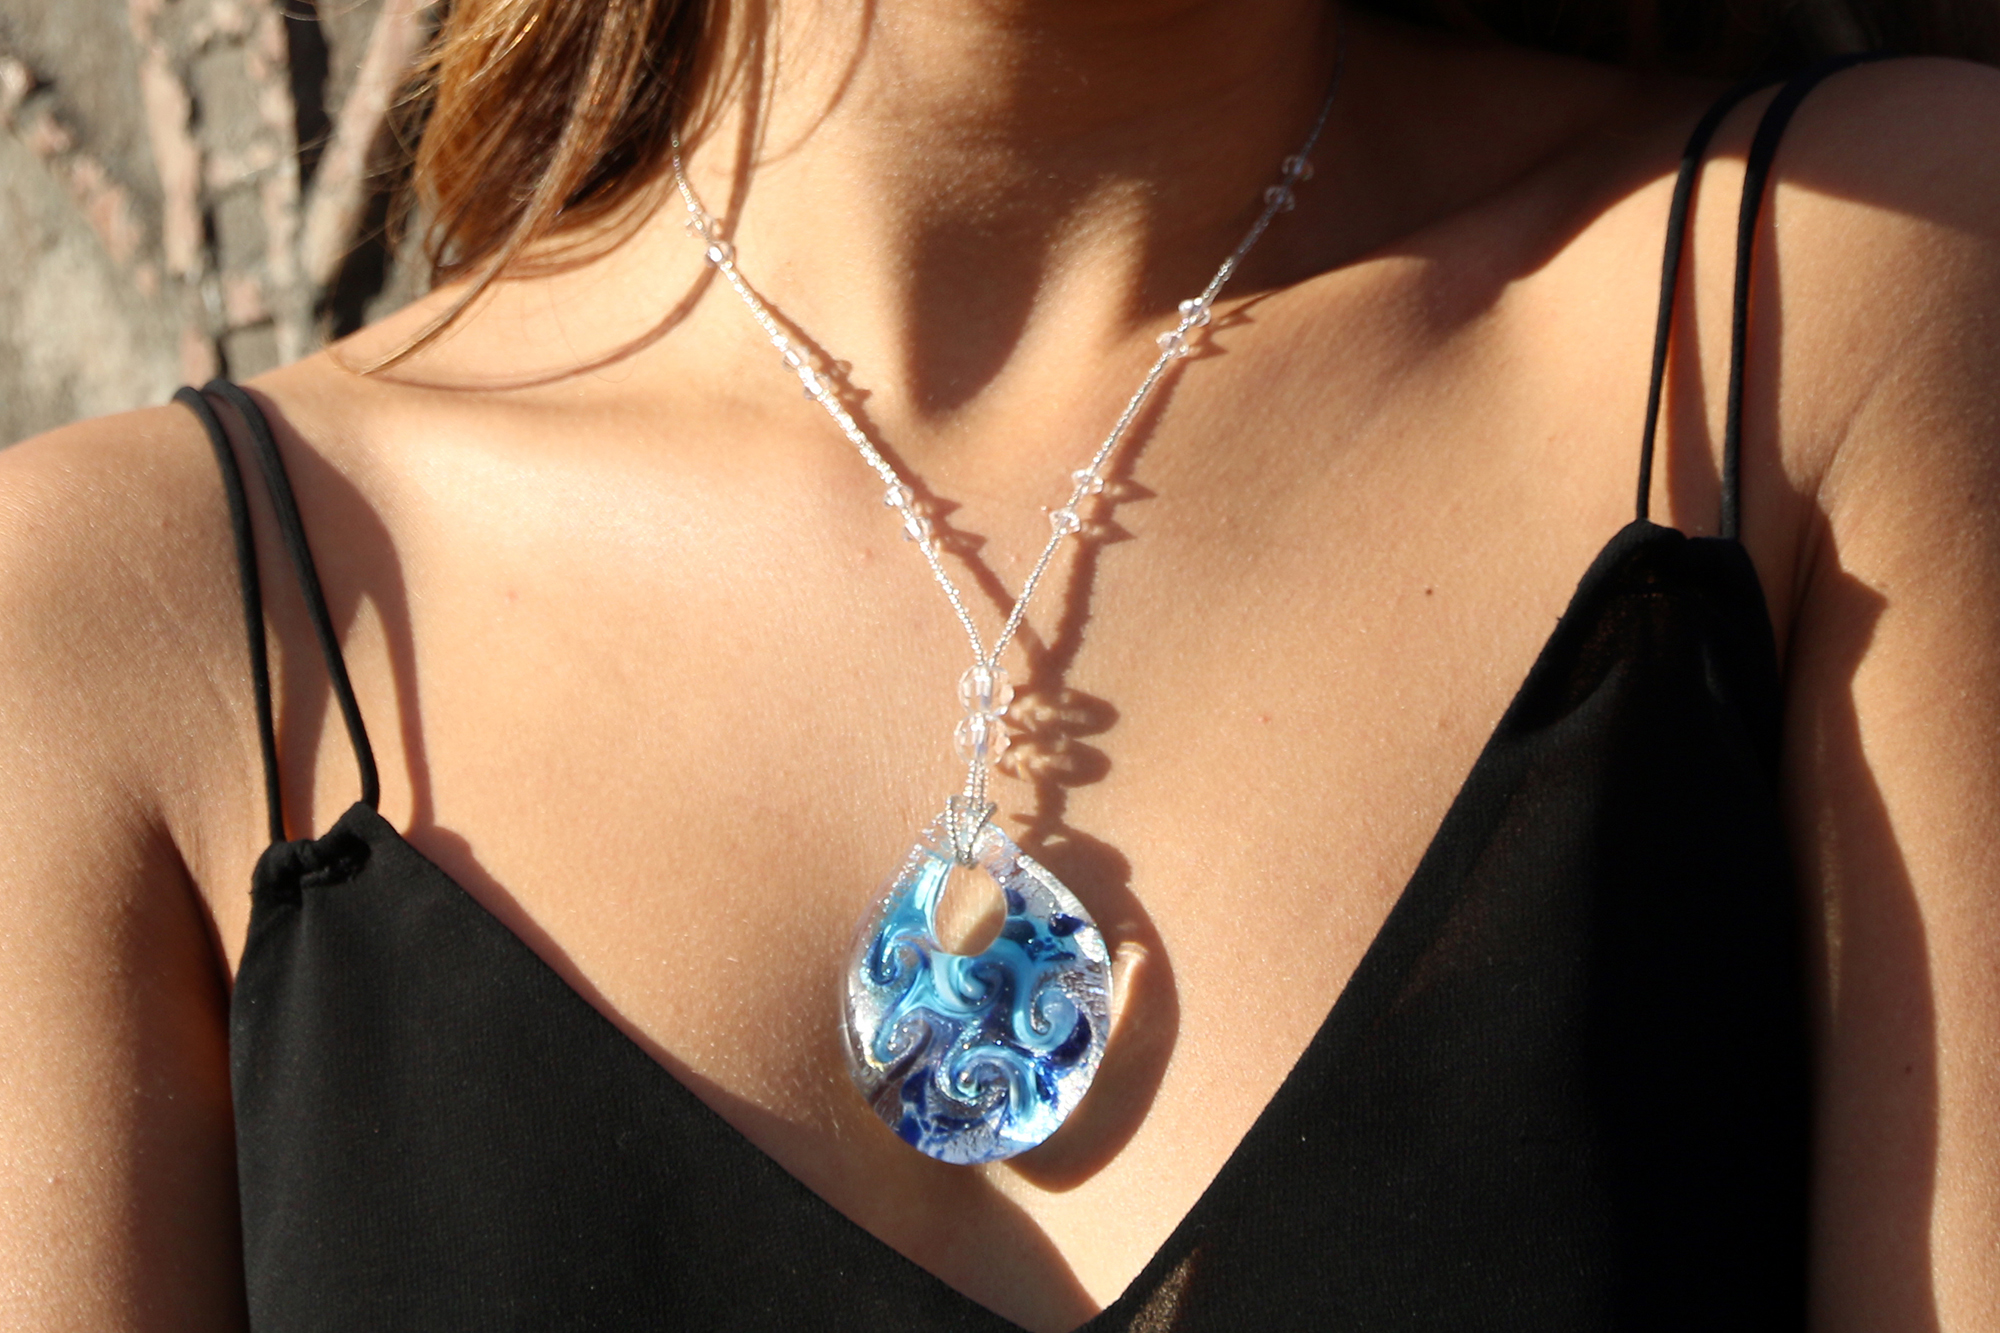 Jewelry made from Murano glass